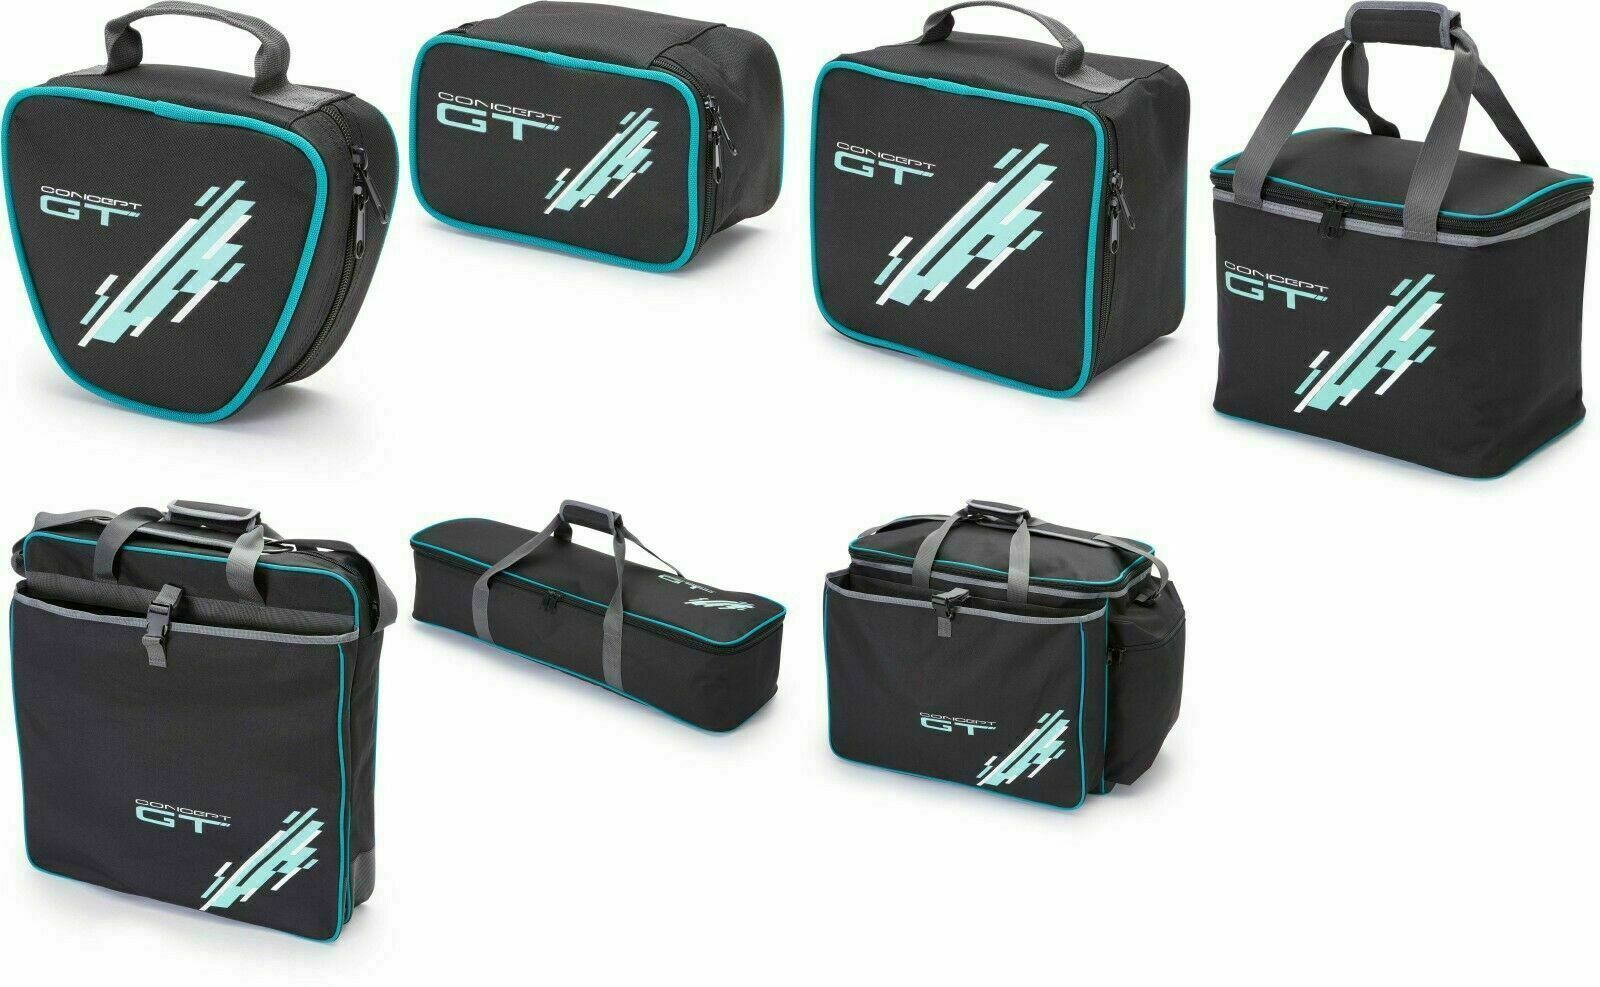 Leeda Concept GT Carryall Coarse Match Fishing Luggage New 2019 Model